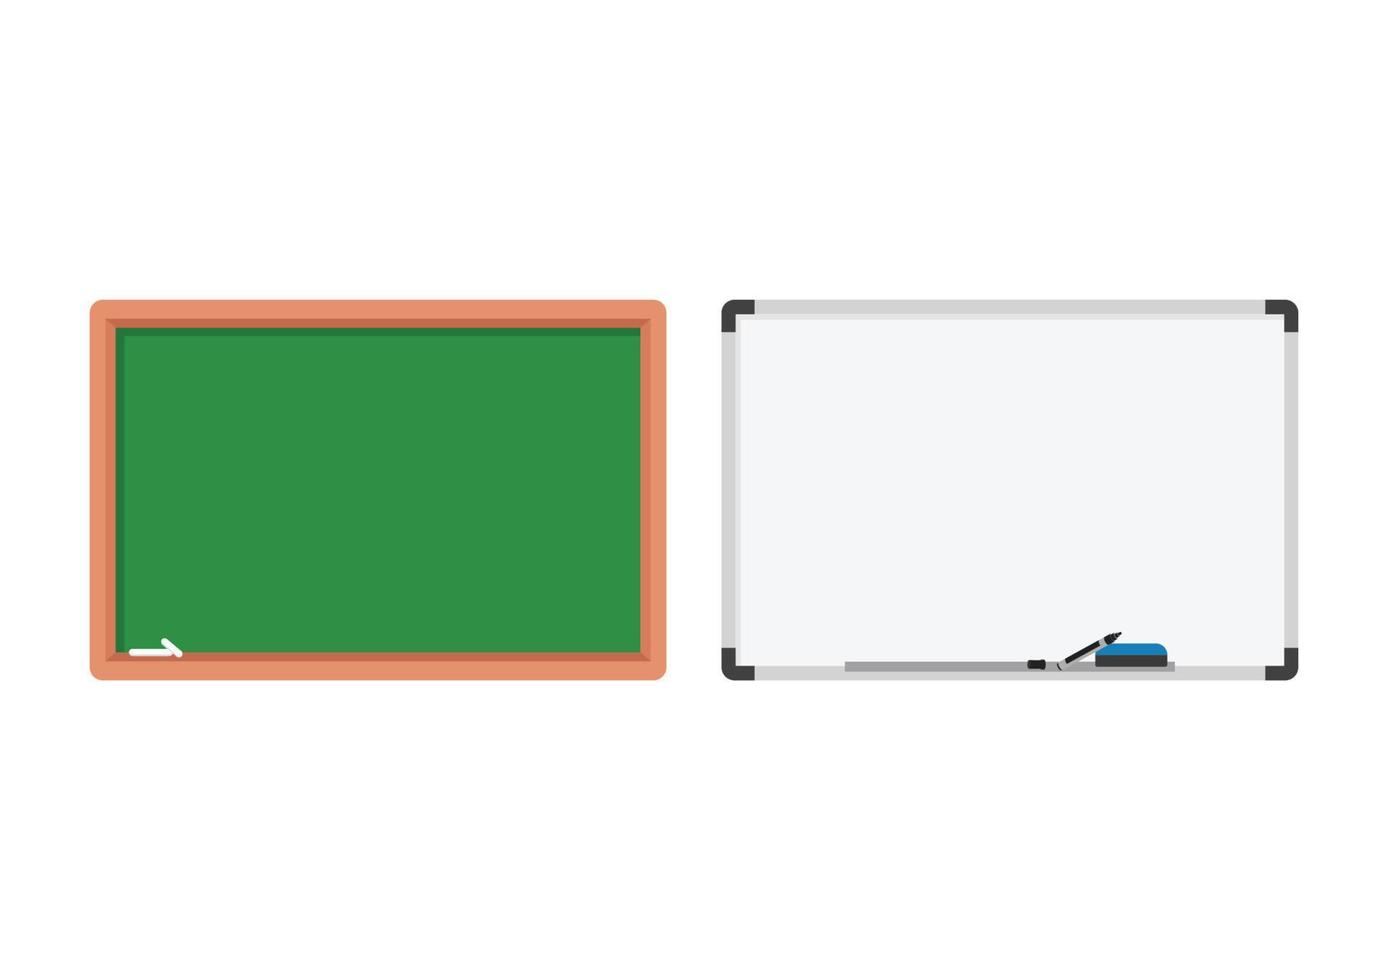 School boards set vector design. Blackboard and whiteboard flat style vector illustration isolated on white background. Blackboard and whiteboard clipart. School green board graphic design